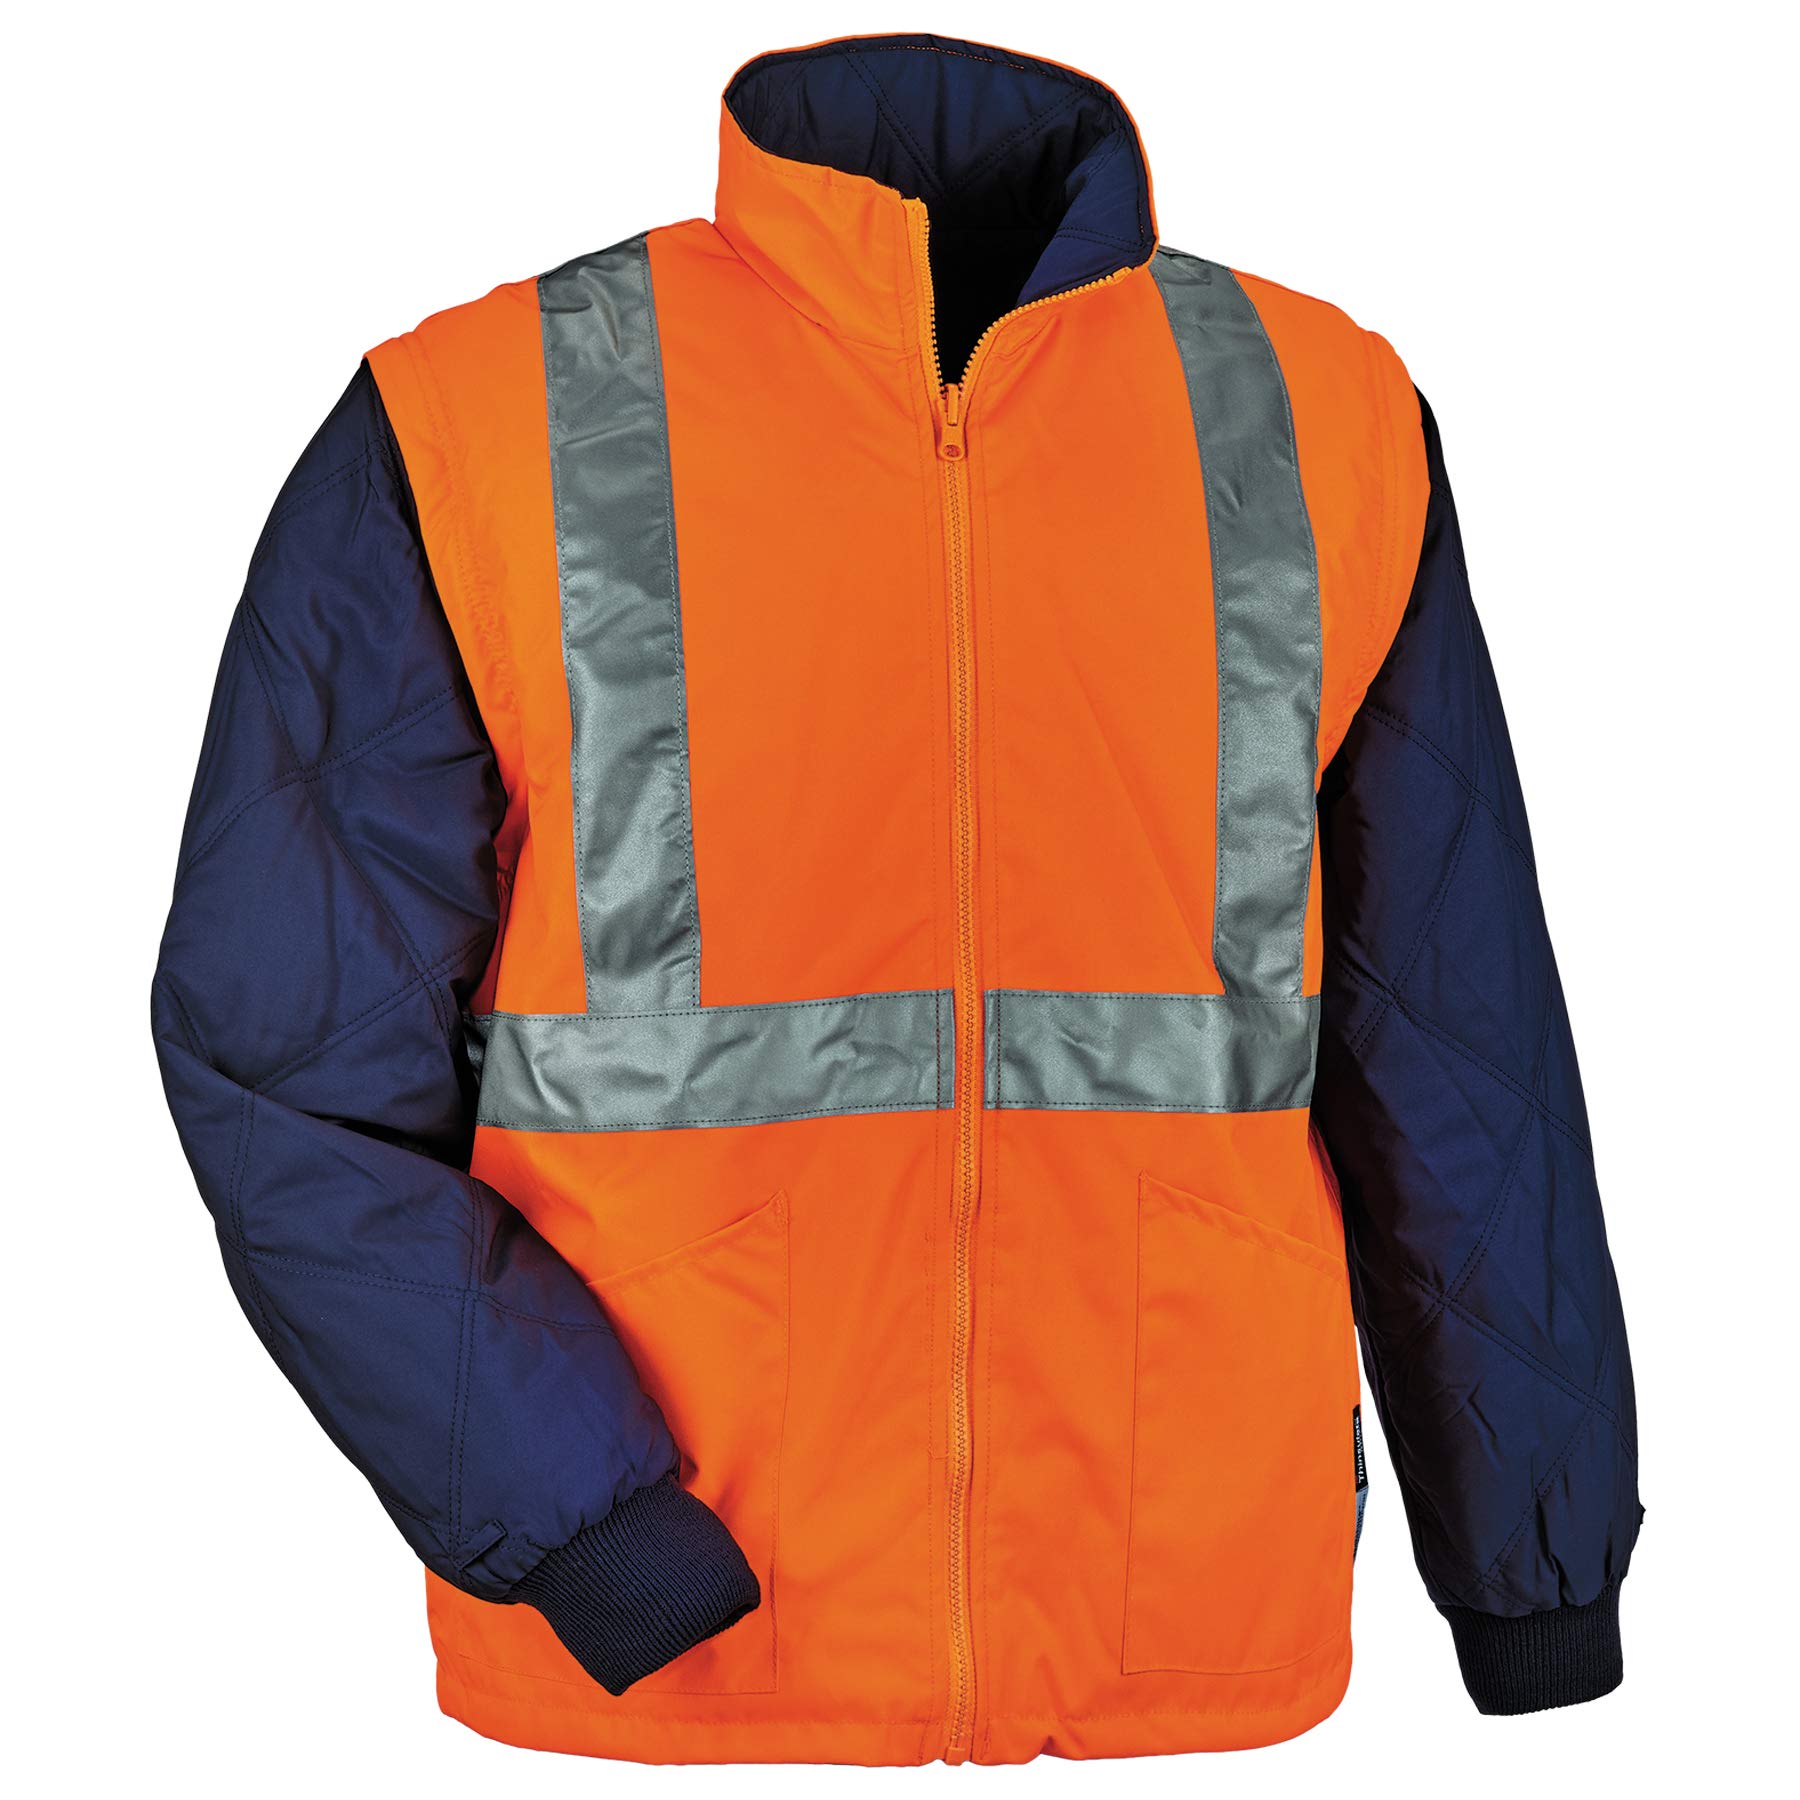 Ergodyne GloWear 8385 ANSI High Visibility 4-in-1 Reflective Safety Jacket, Orange, Small